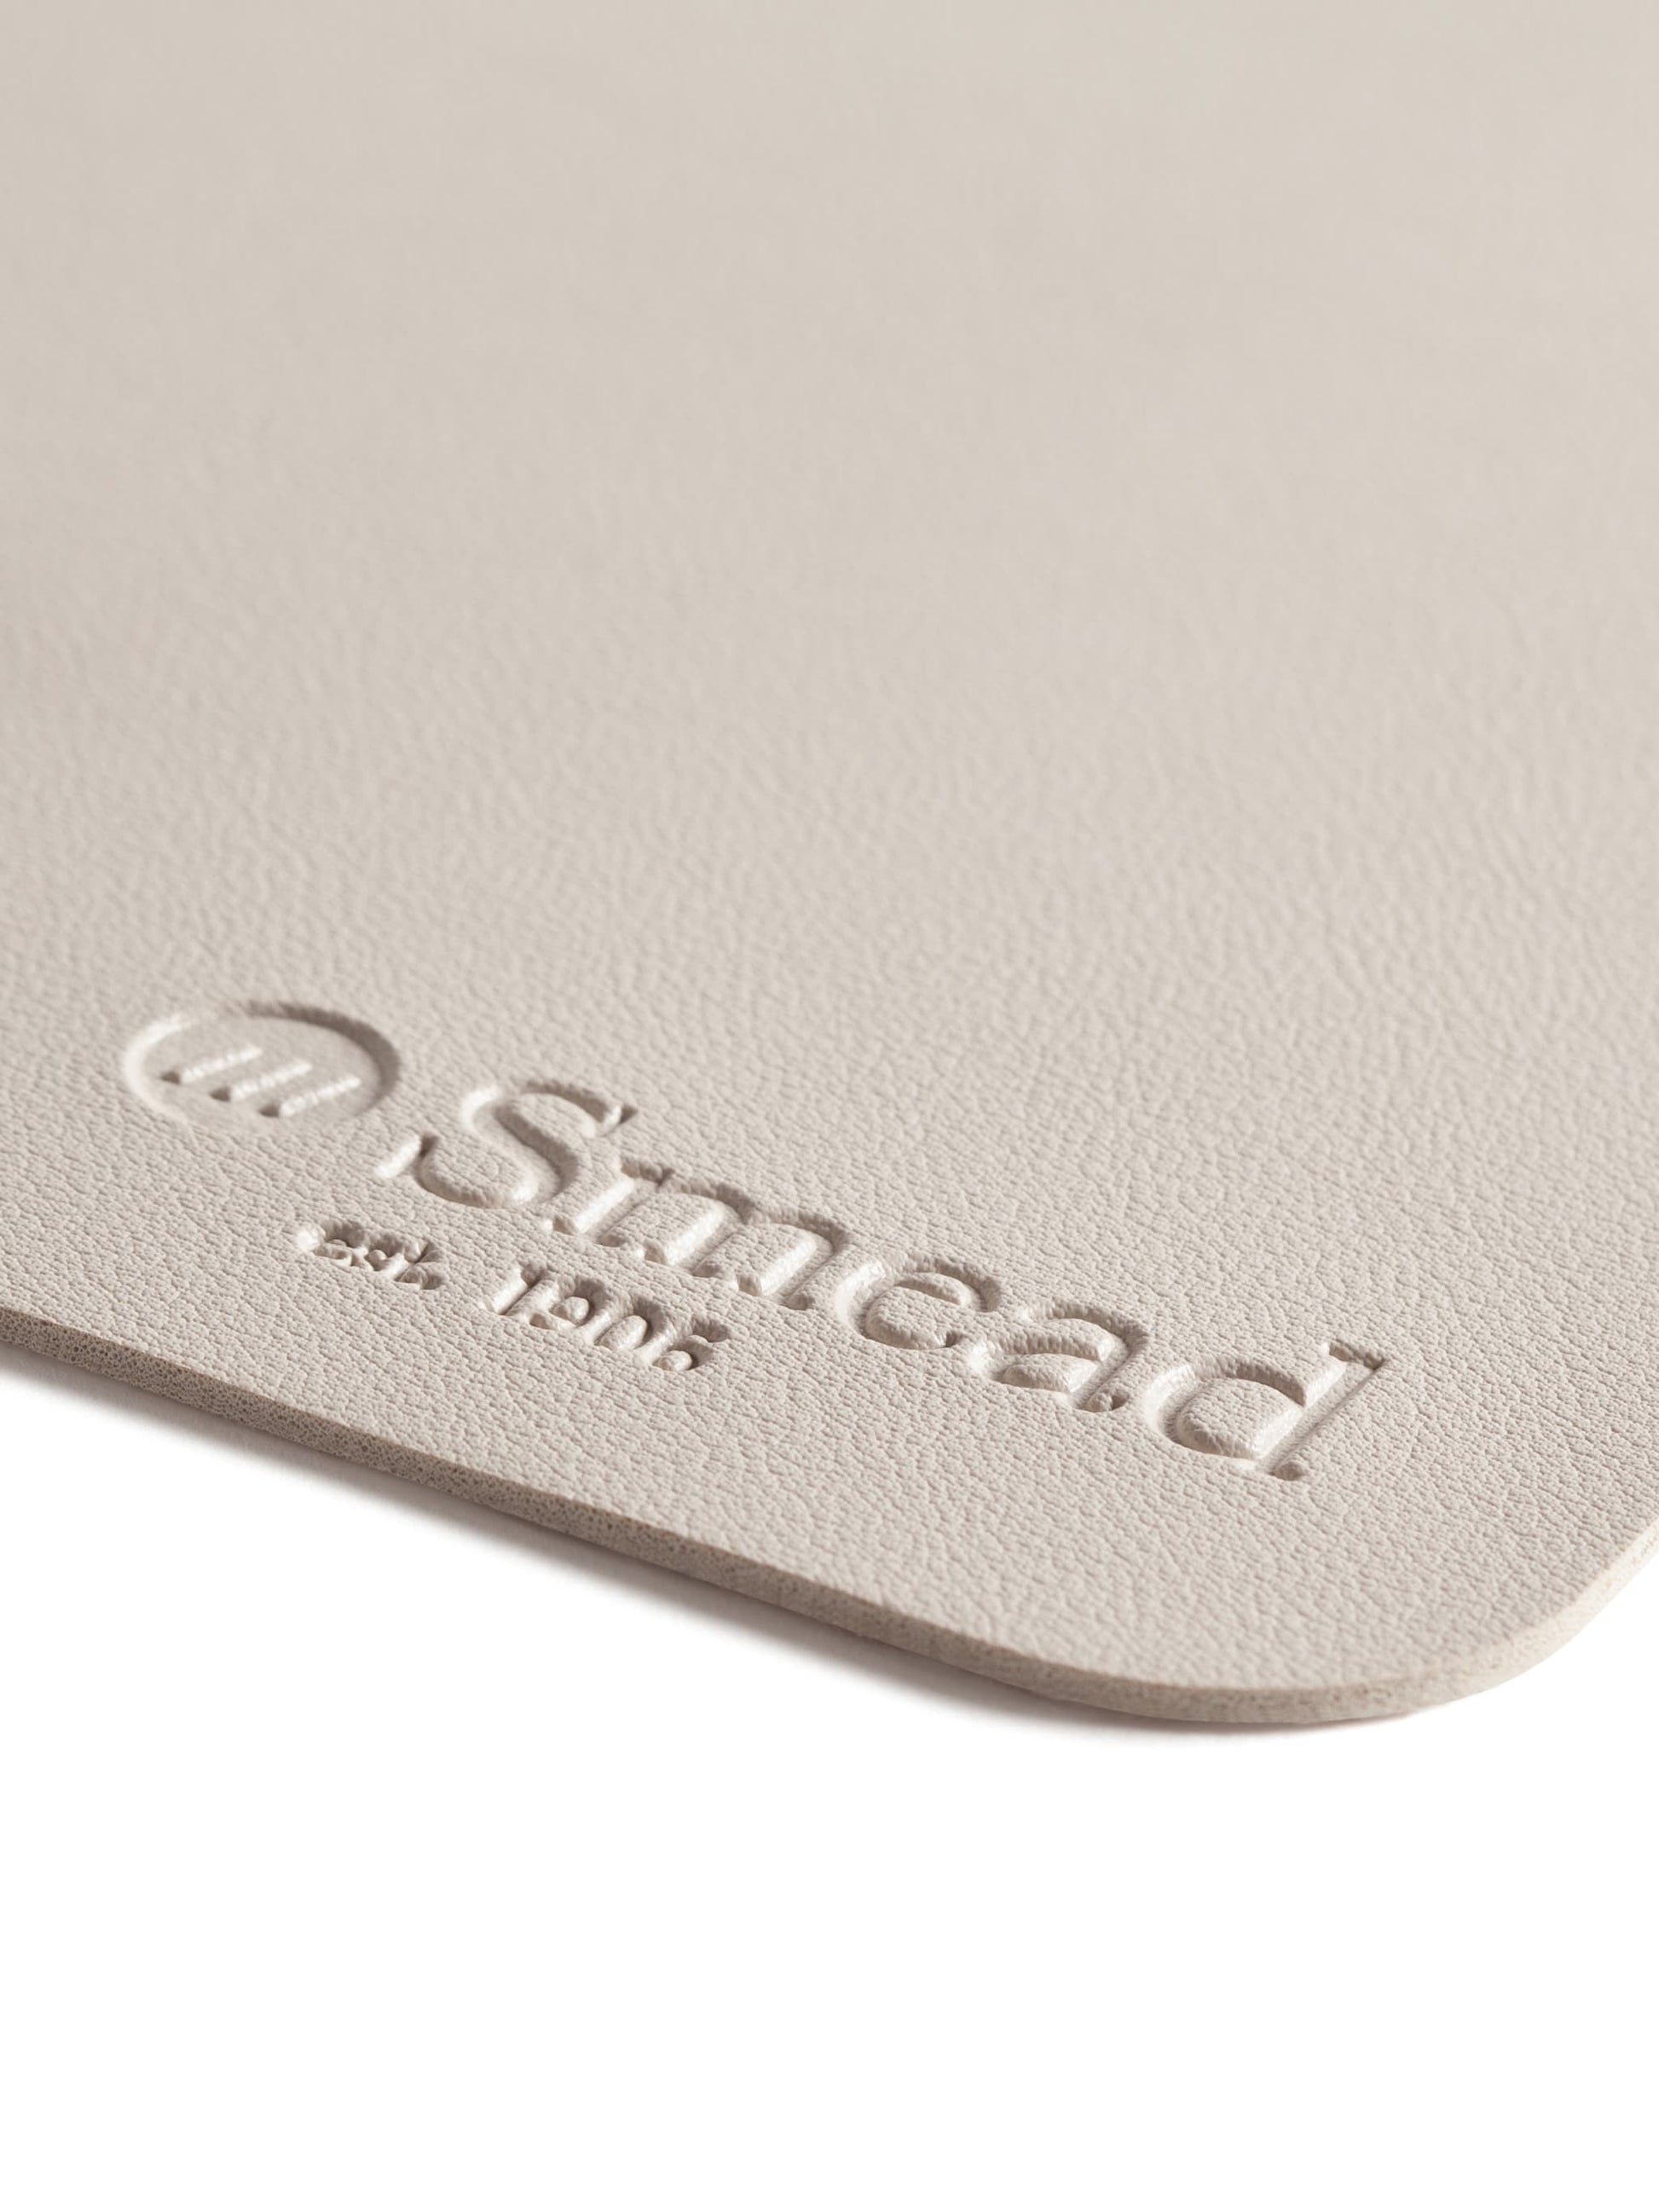 Vegan Leather Desk Pad, Sandstone Color, 36X17 Size, 086486648264